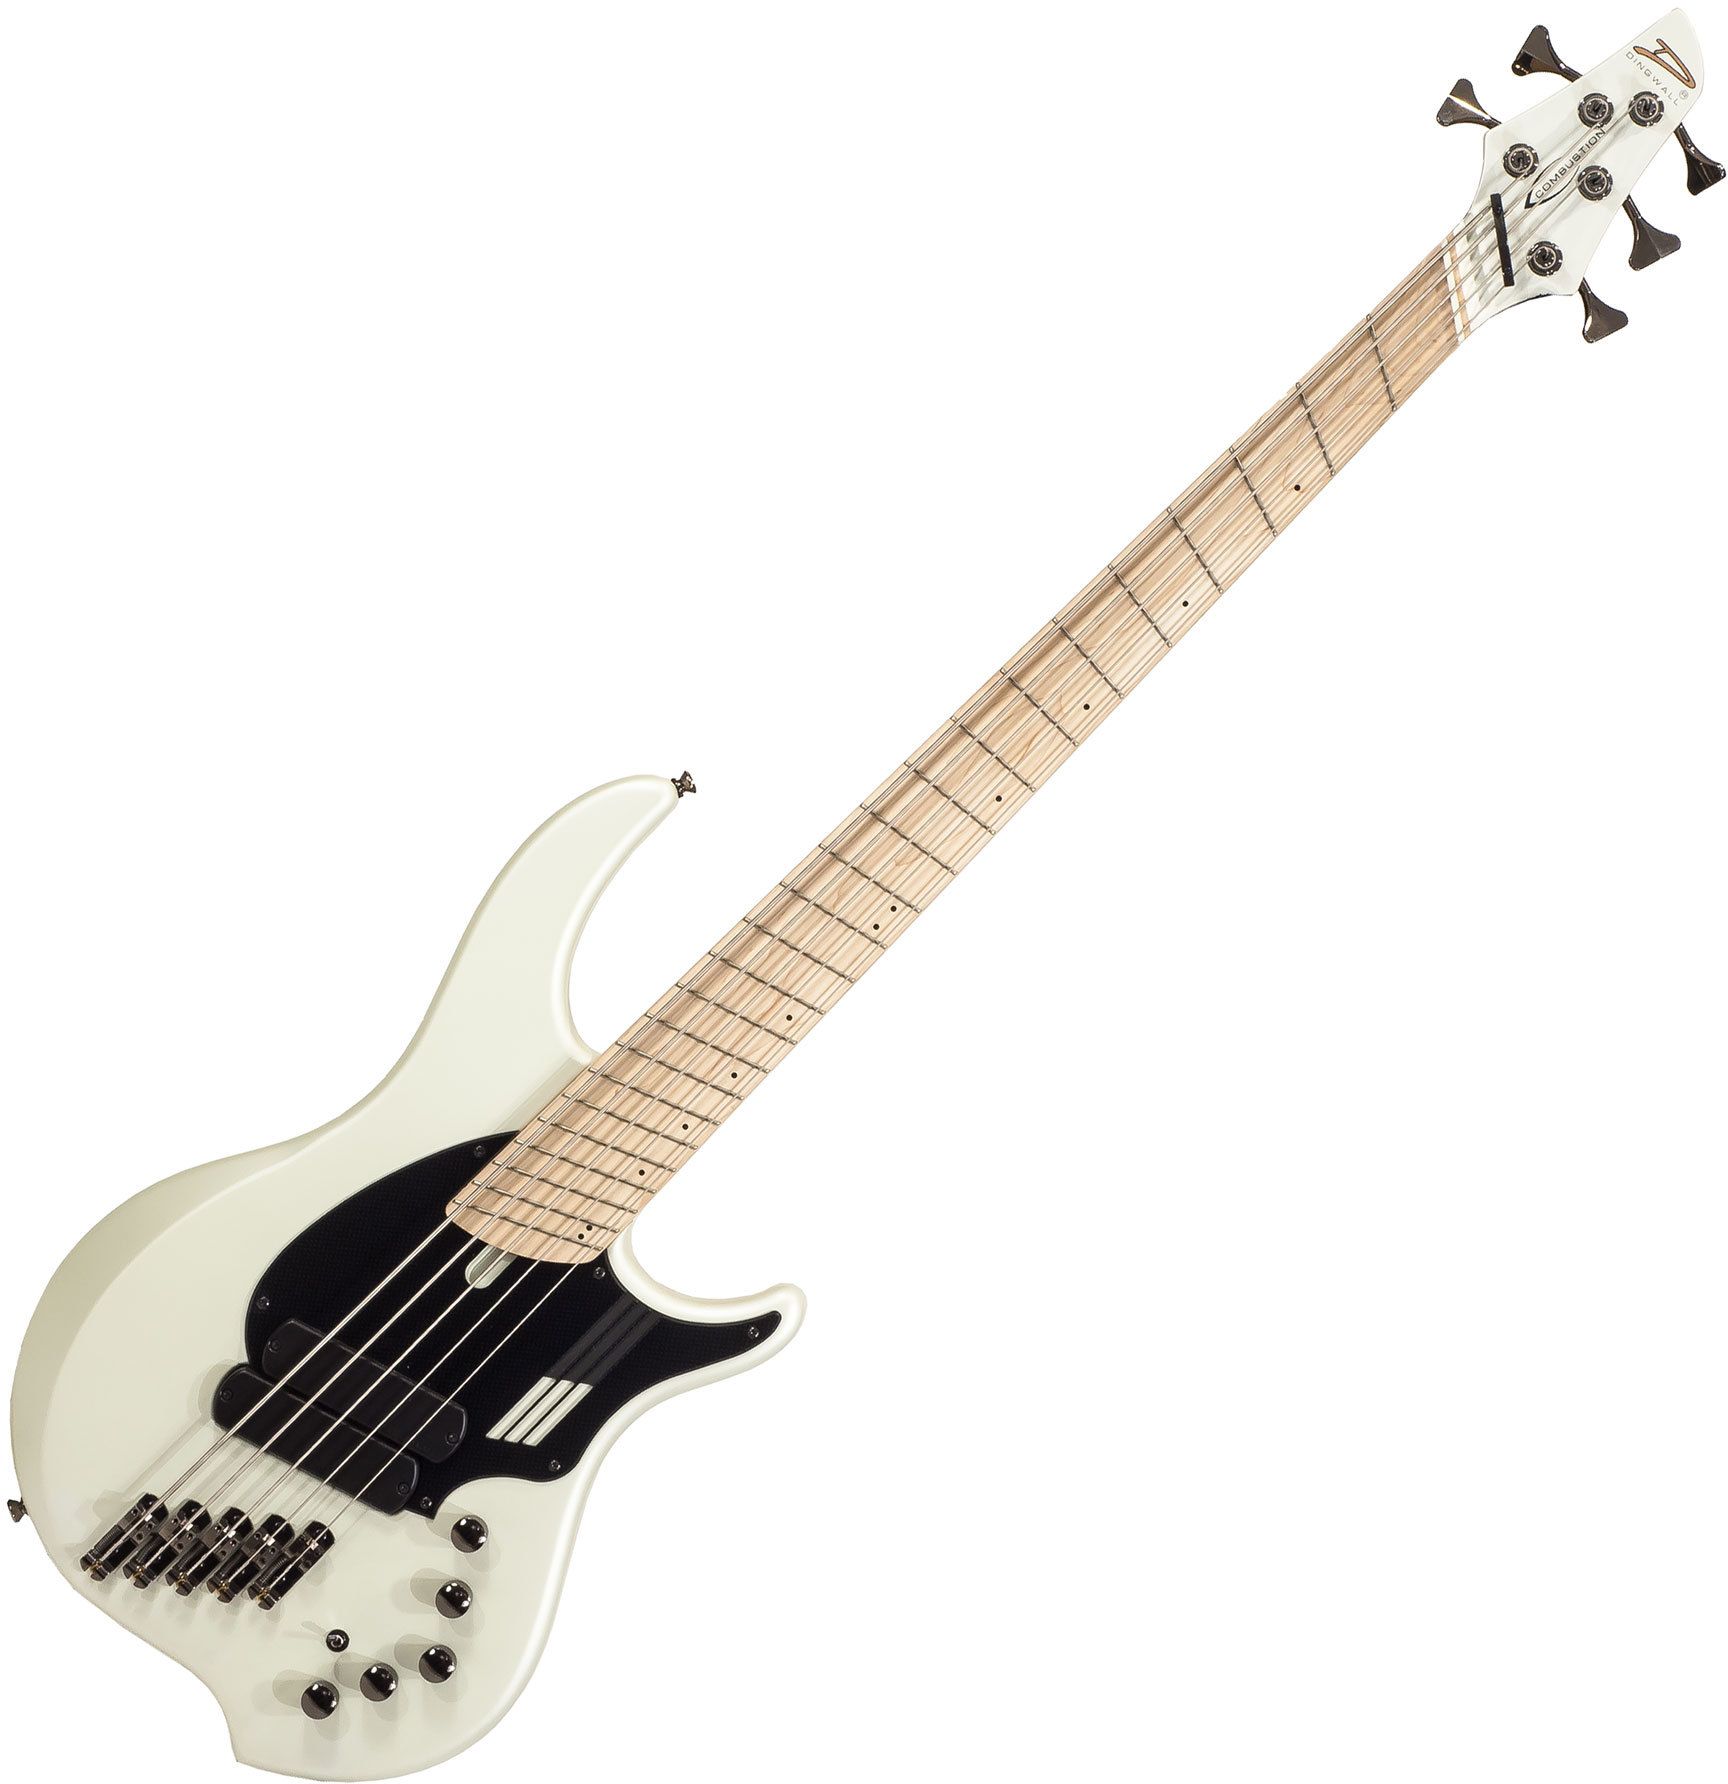 Dingwall NG2 - 5 String - Pearl White Bass Guitar